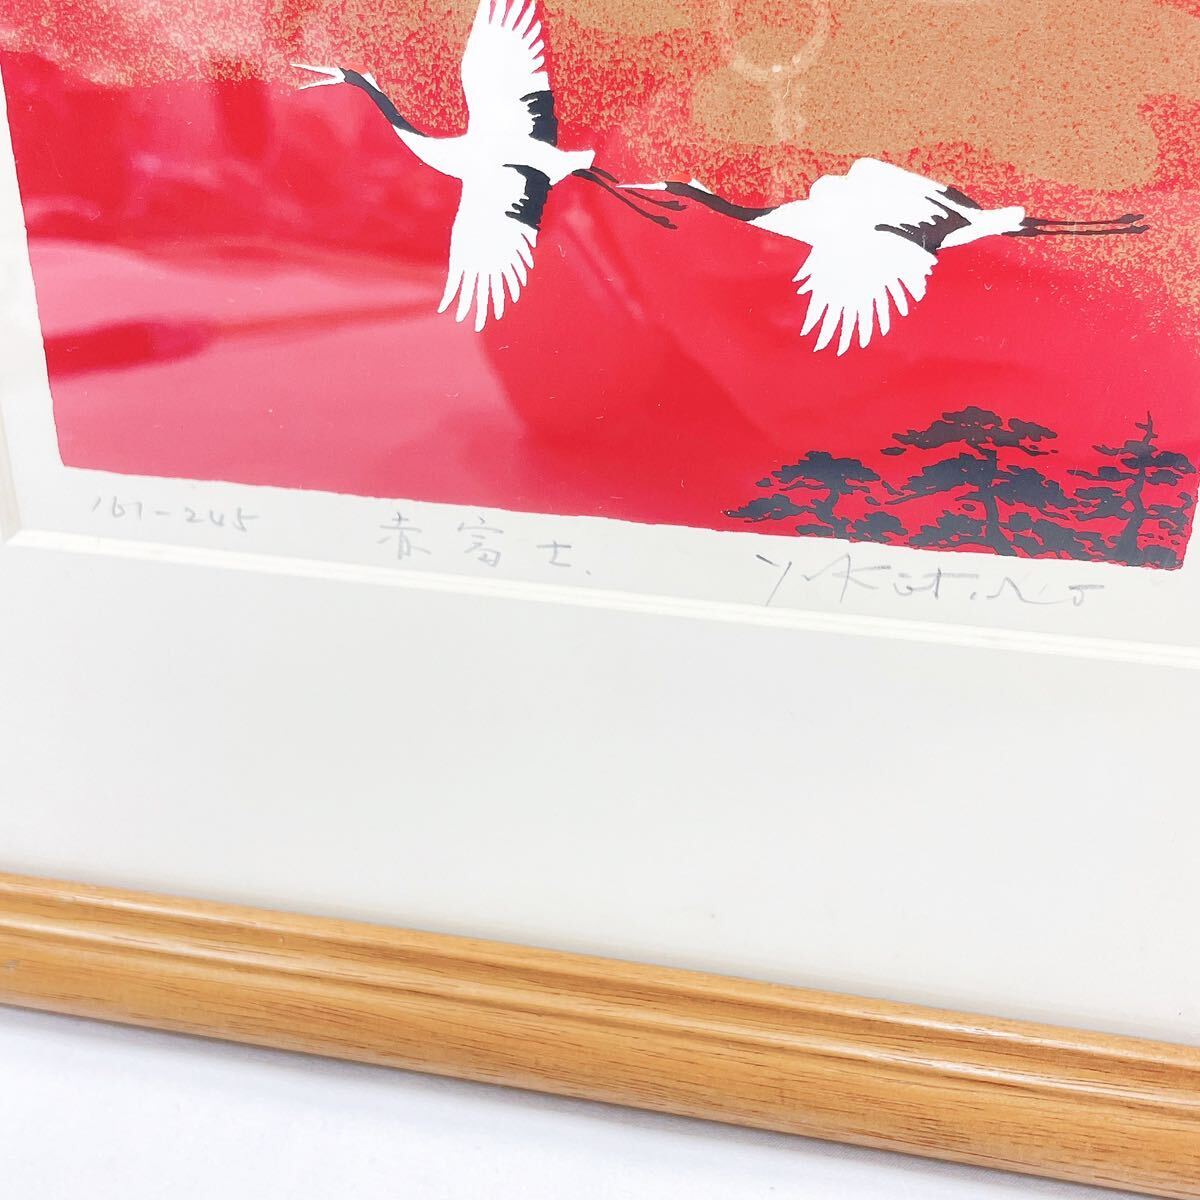  Yoshioka . Taro [ red Fuji ] silk screen Mt Fuji crane landscape painting 161-245 R shop 04300